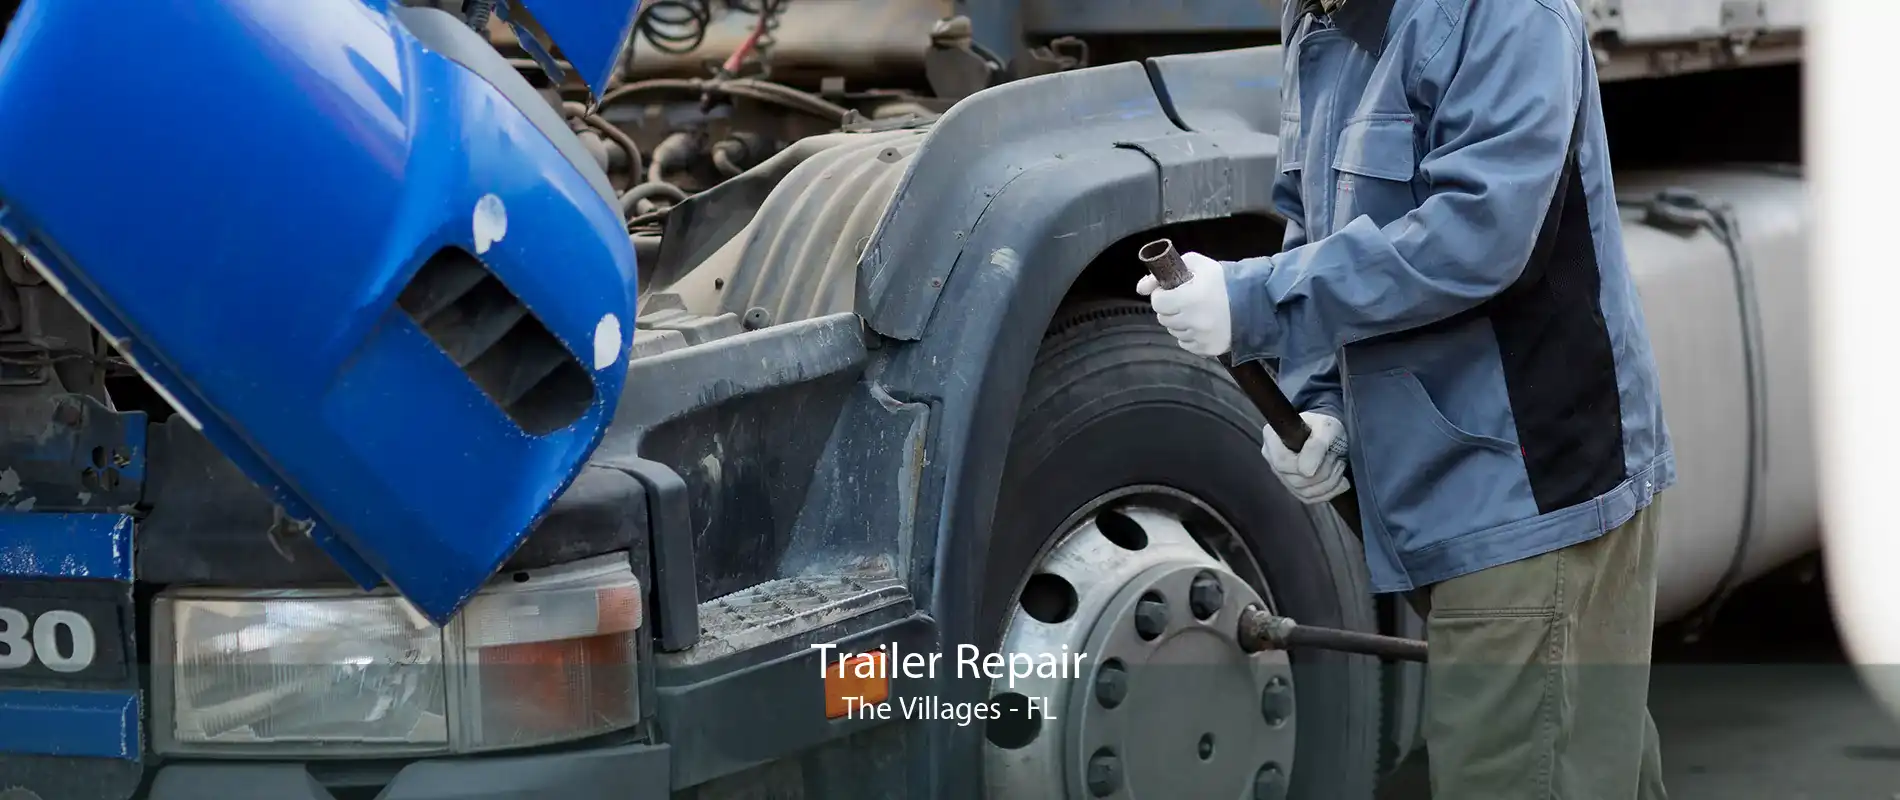 Trailer Repair The Villages - FL